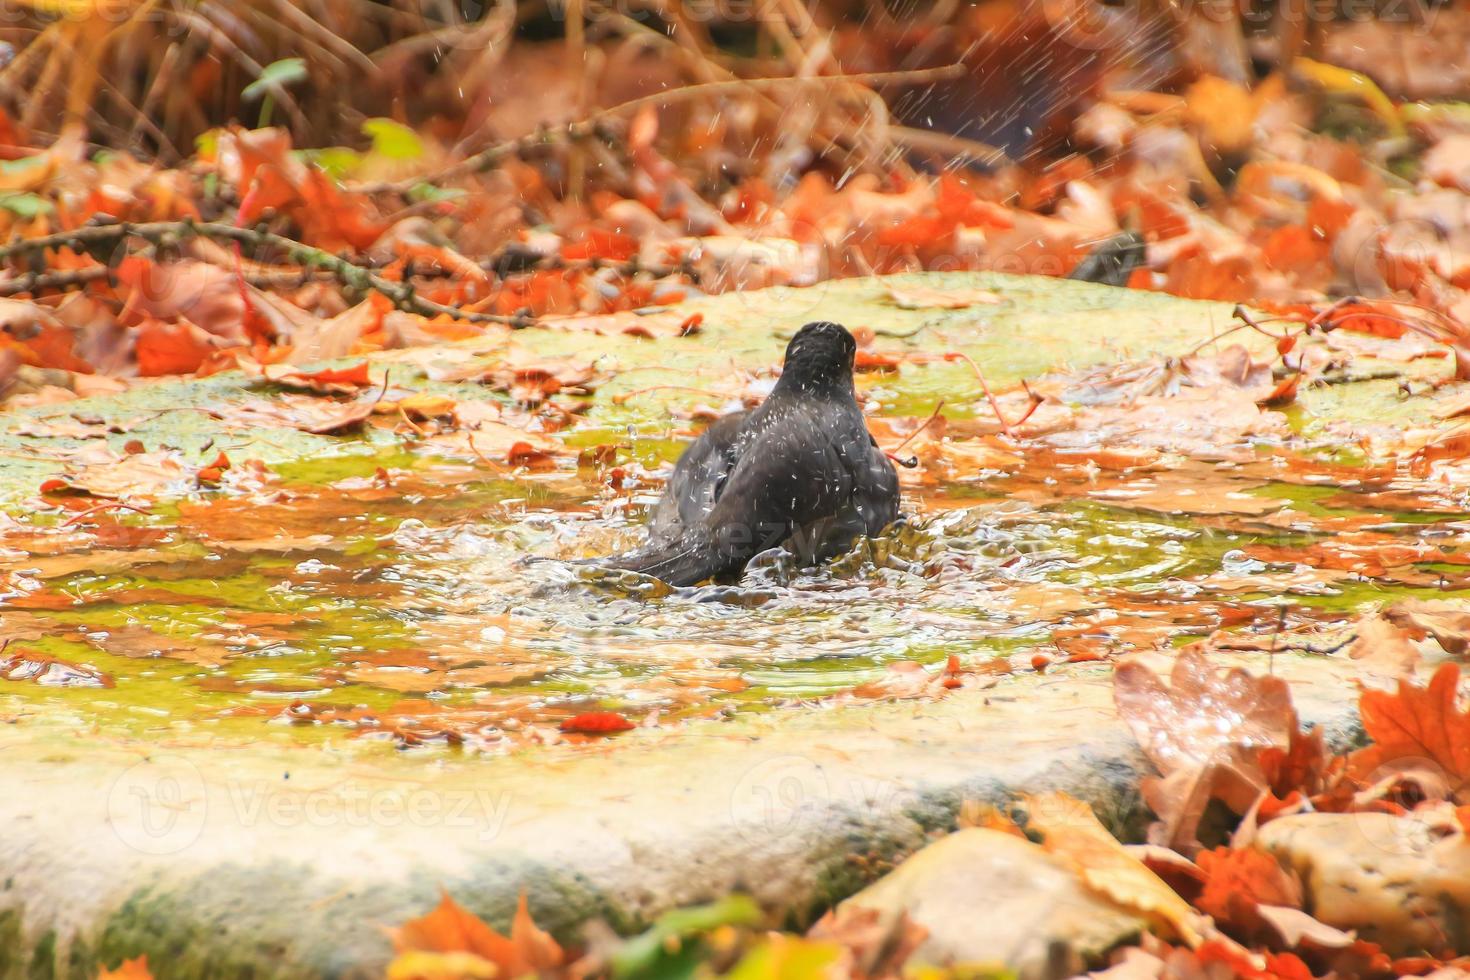 Common Blackbird,Turdus merula, is having a bath in a public pool in the park photo